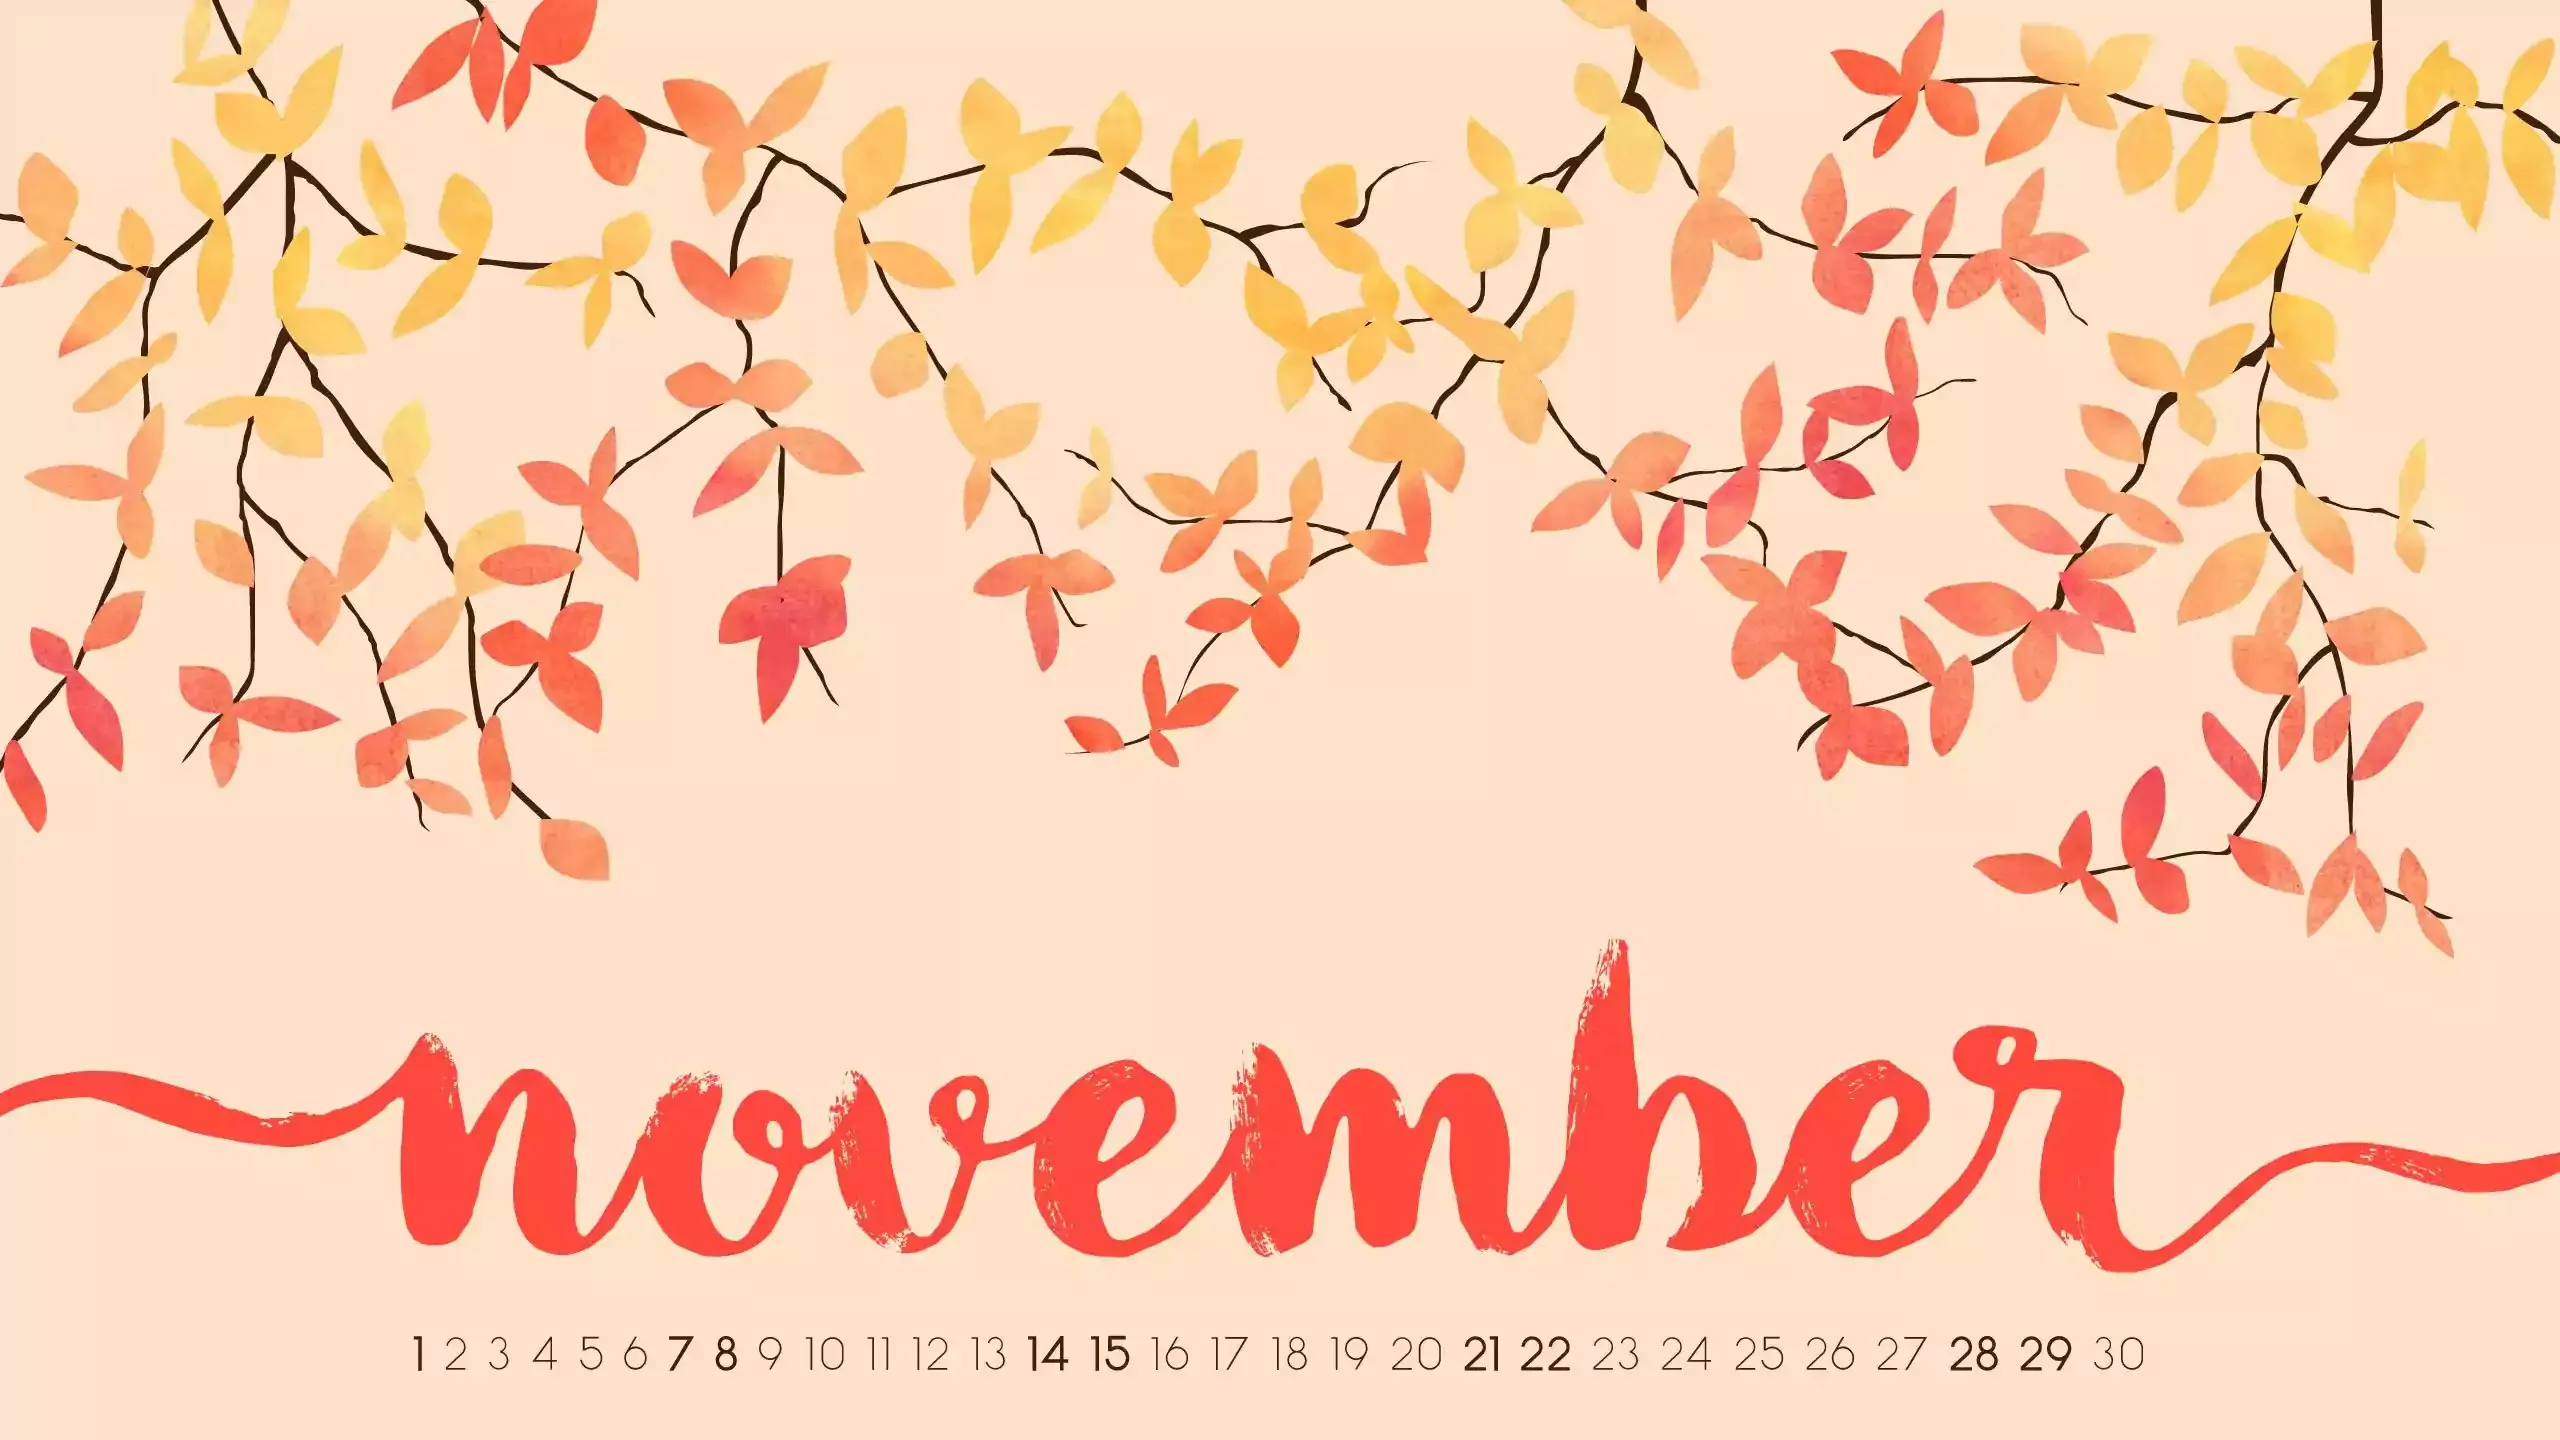 November wallpaper desktop discover more beautiful cold gregorian calendars julian month wallpapâ november wallpaper calendar wallpaper november backgrounds